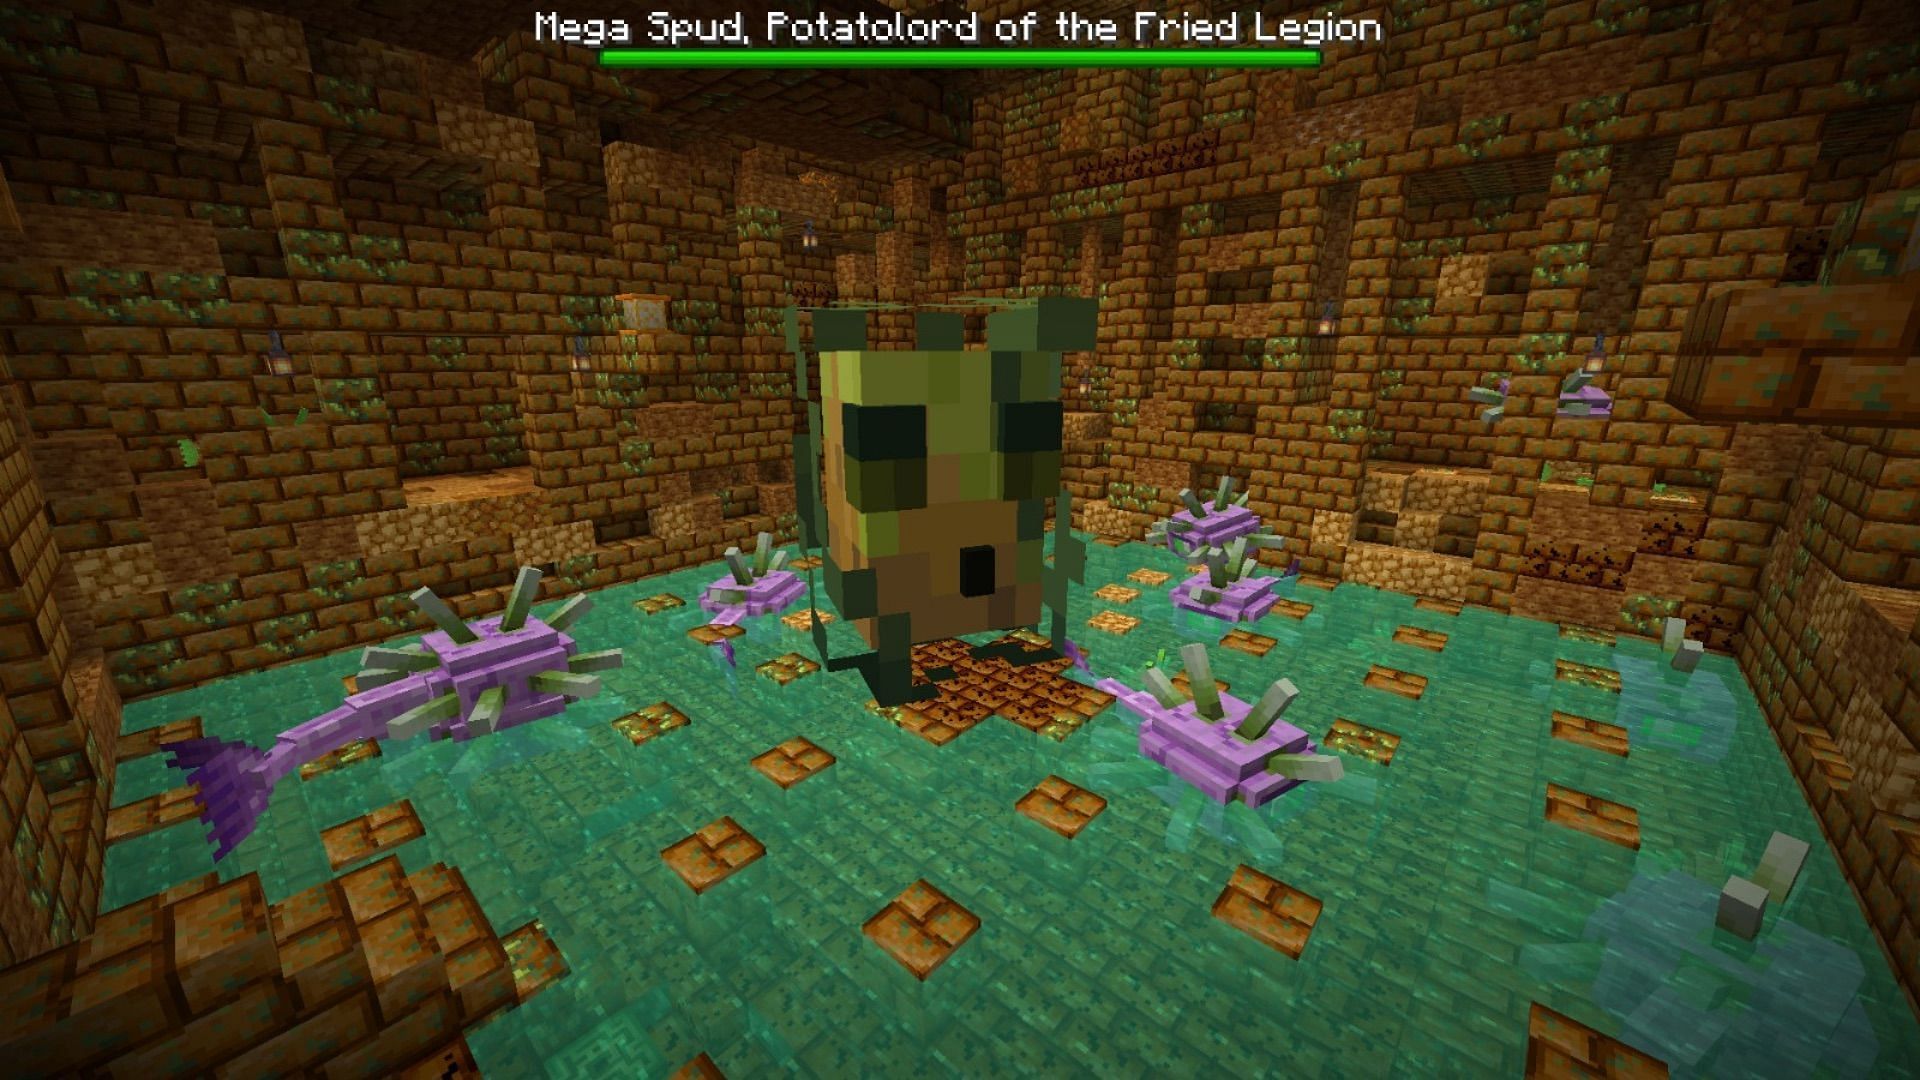 The potato boss in Poisonous Potato dimension. (Image via Mojang Studios)